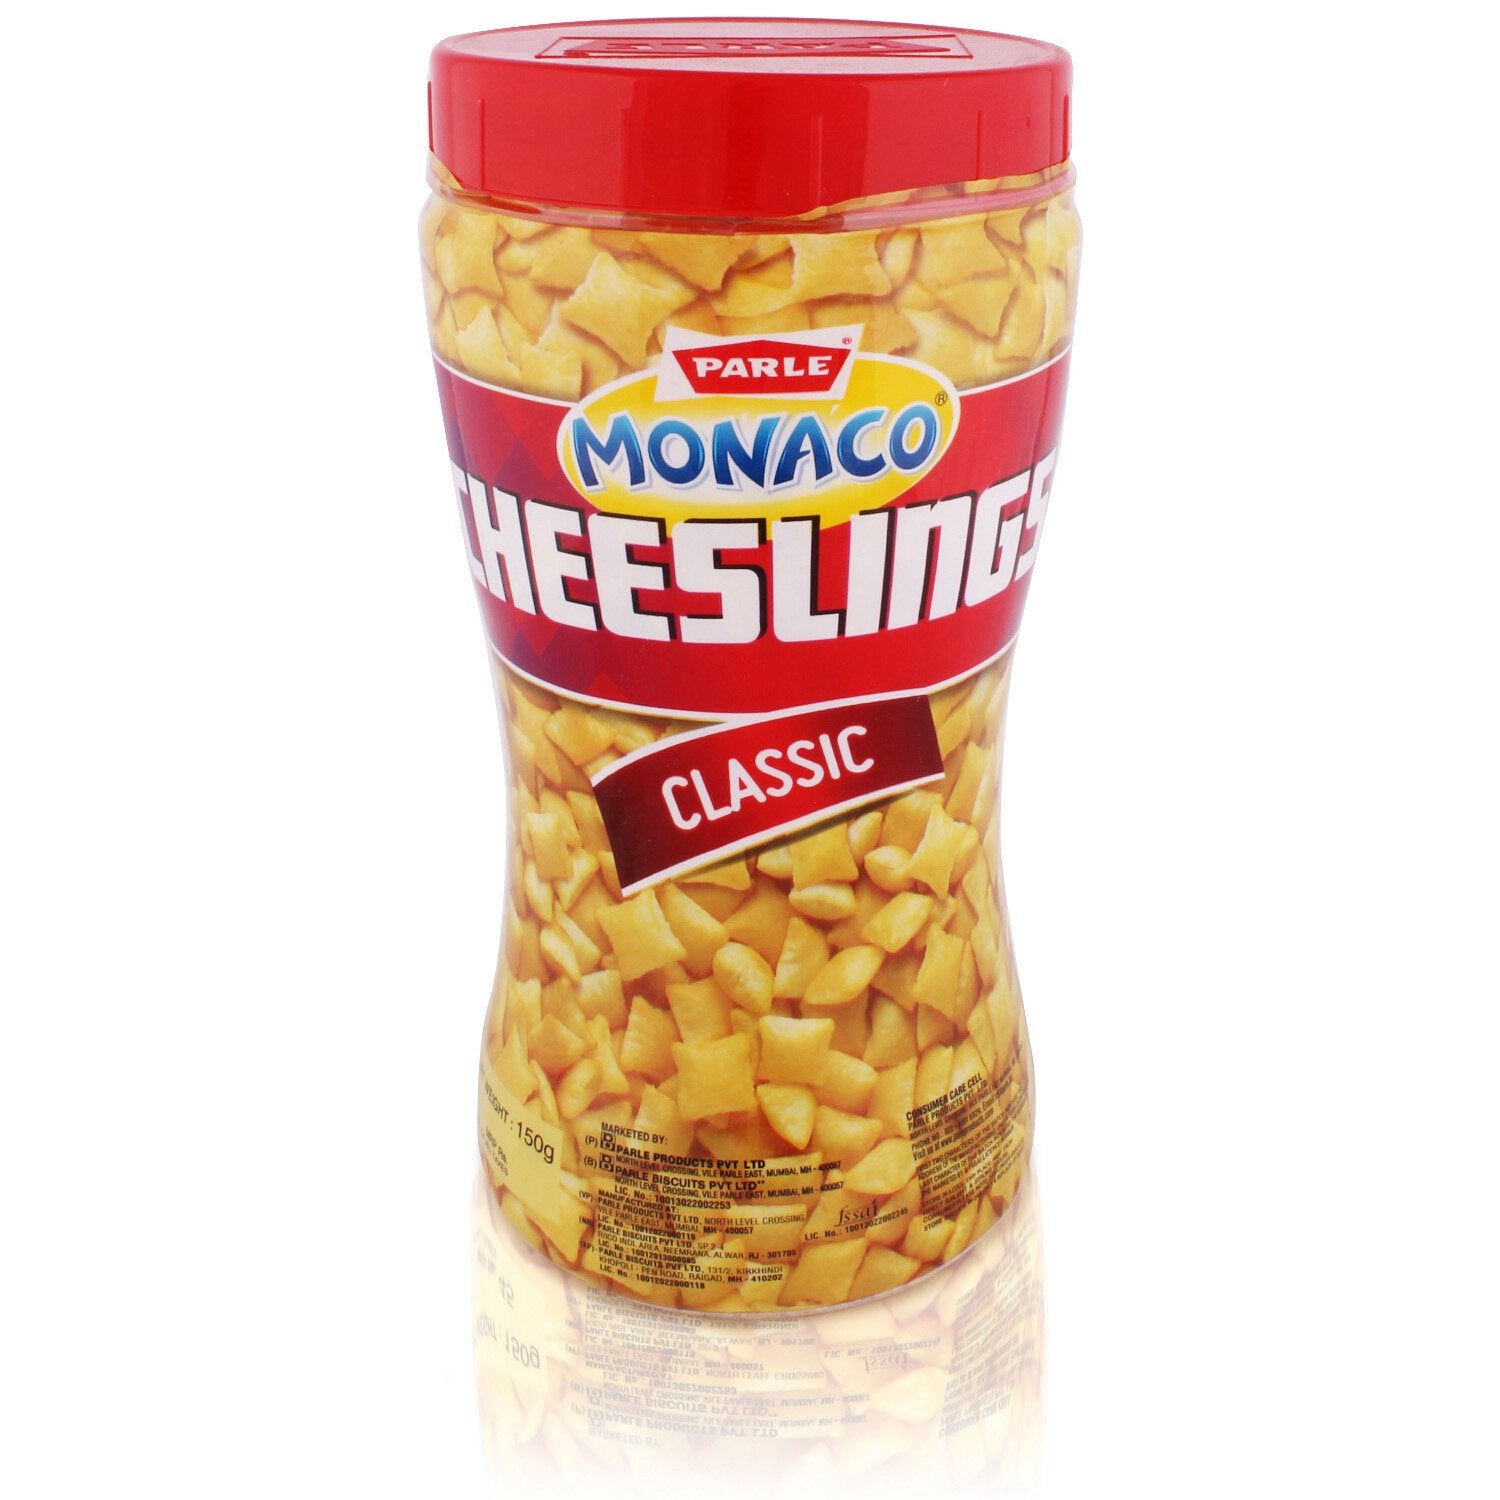 Parle Monaco Cheeselings Classic 150 Gram Jar